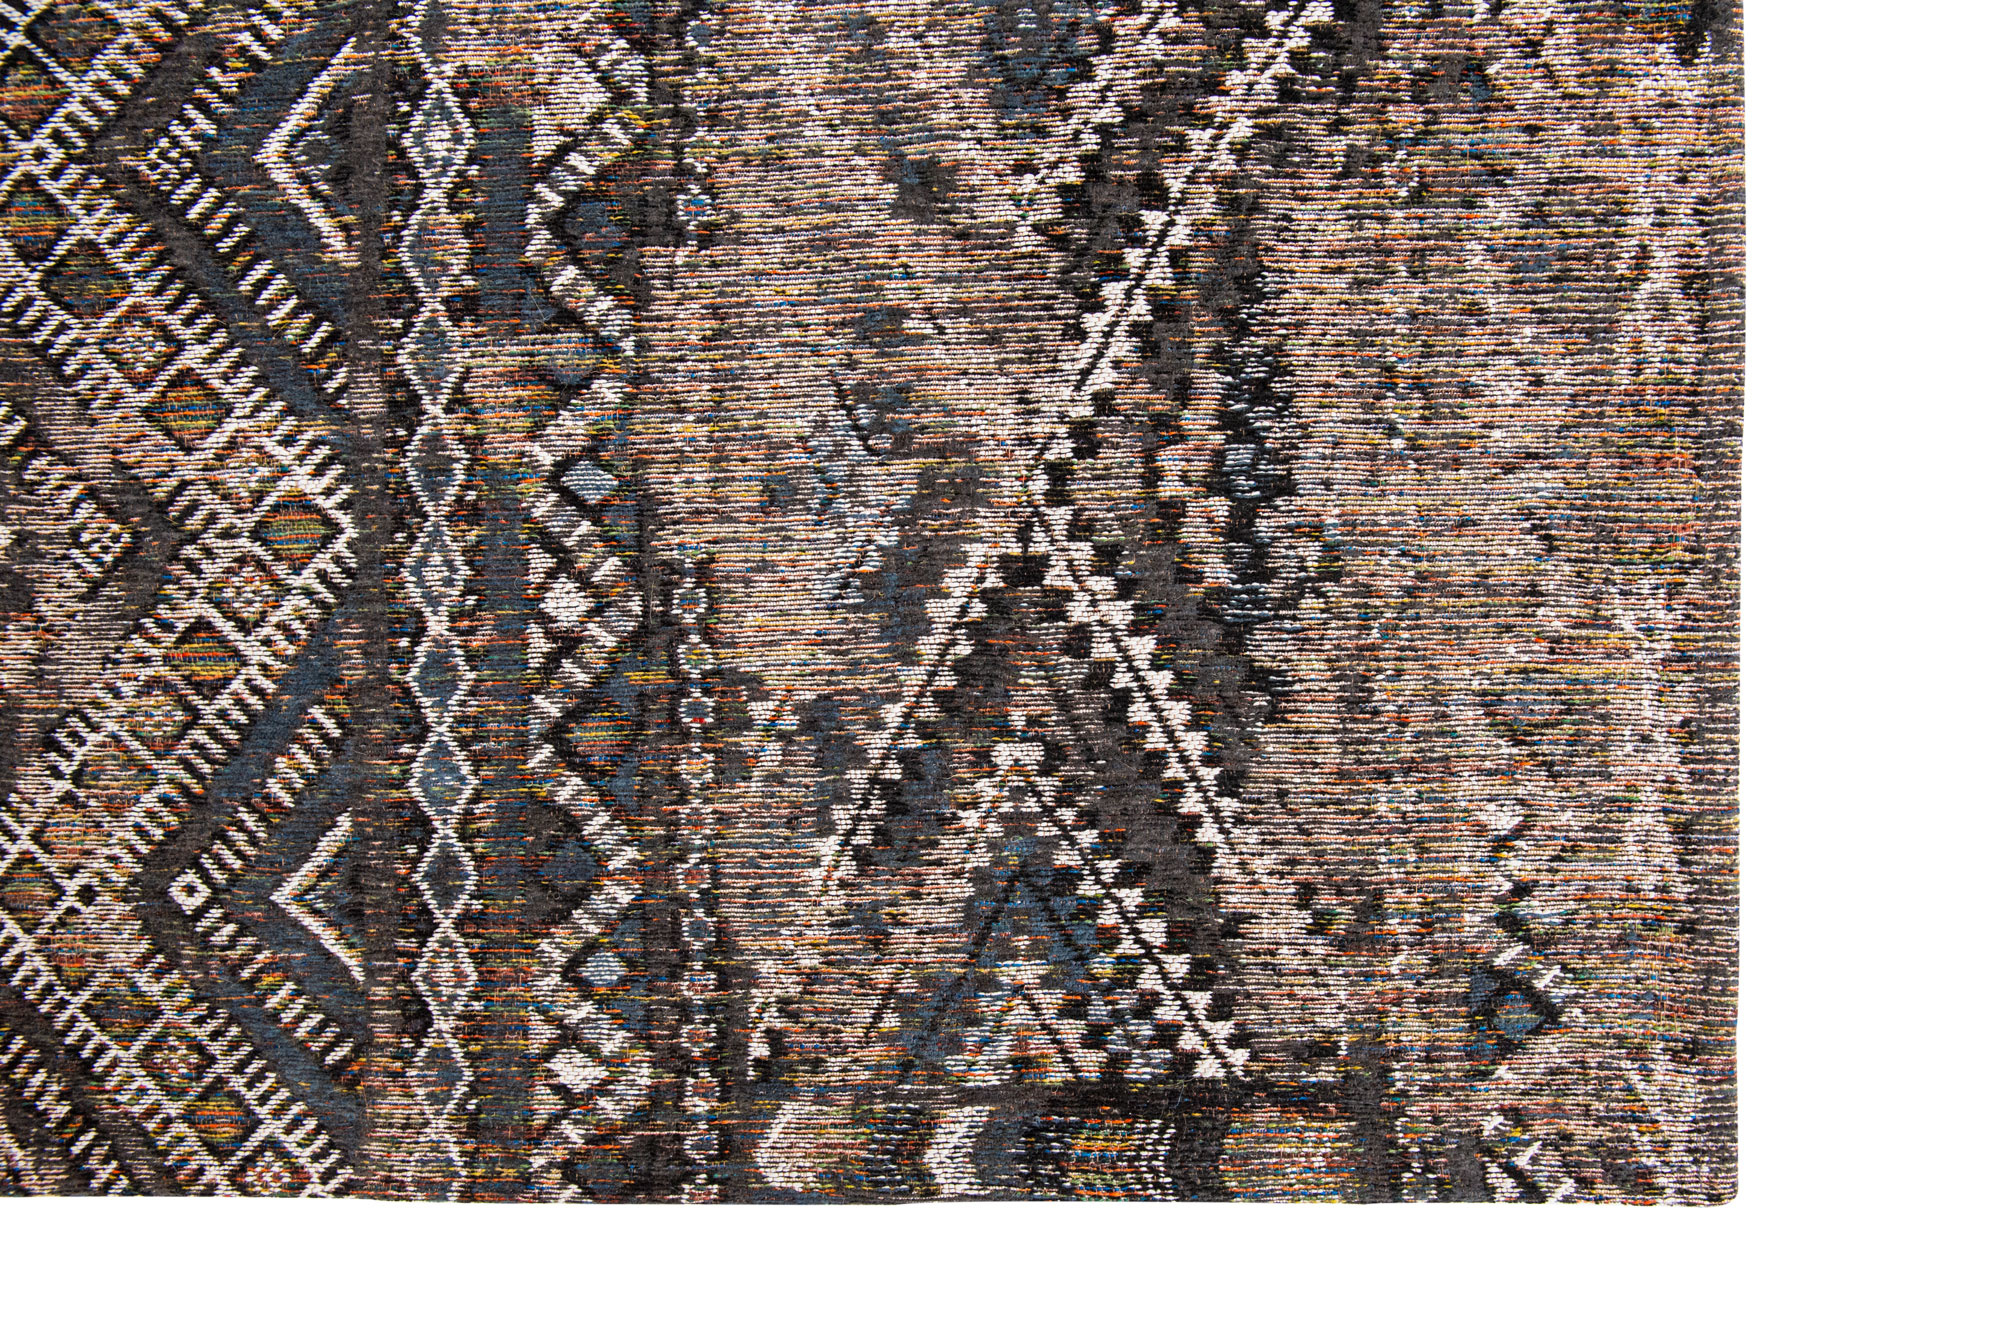 Antiquarian Flatwoven Black Rug ☞ Size: 9' 2" x 13' (280 x 390 cm)